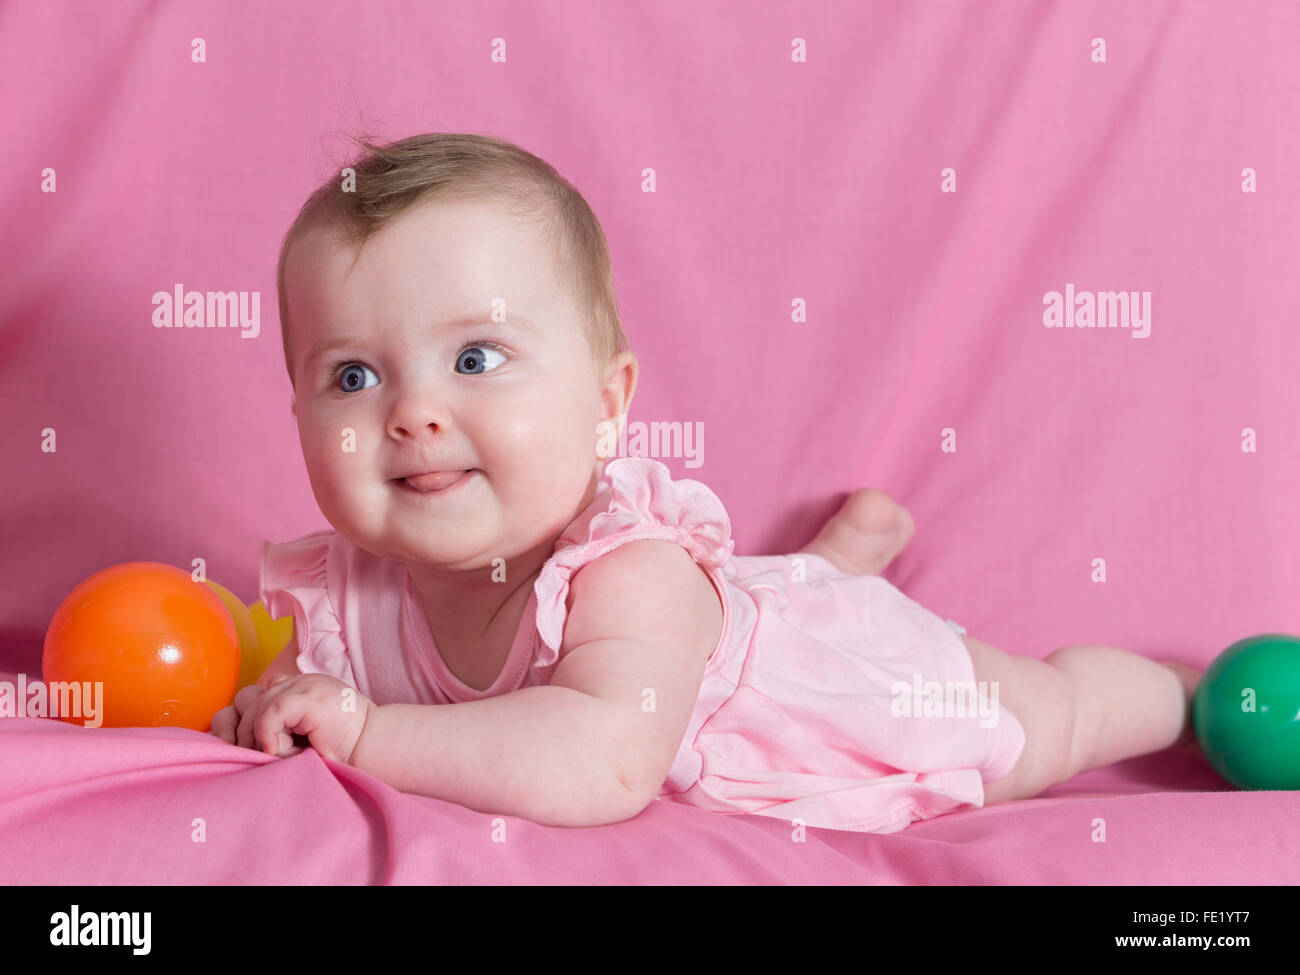 Adorable happy baby girl sur fond rose Banque D'Images